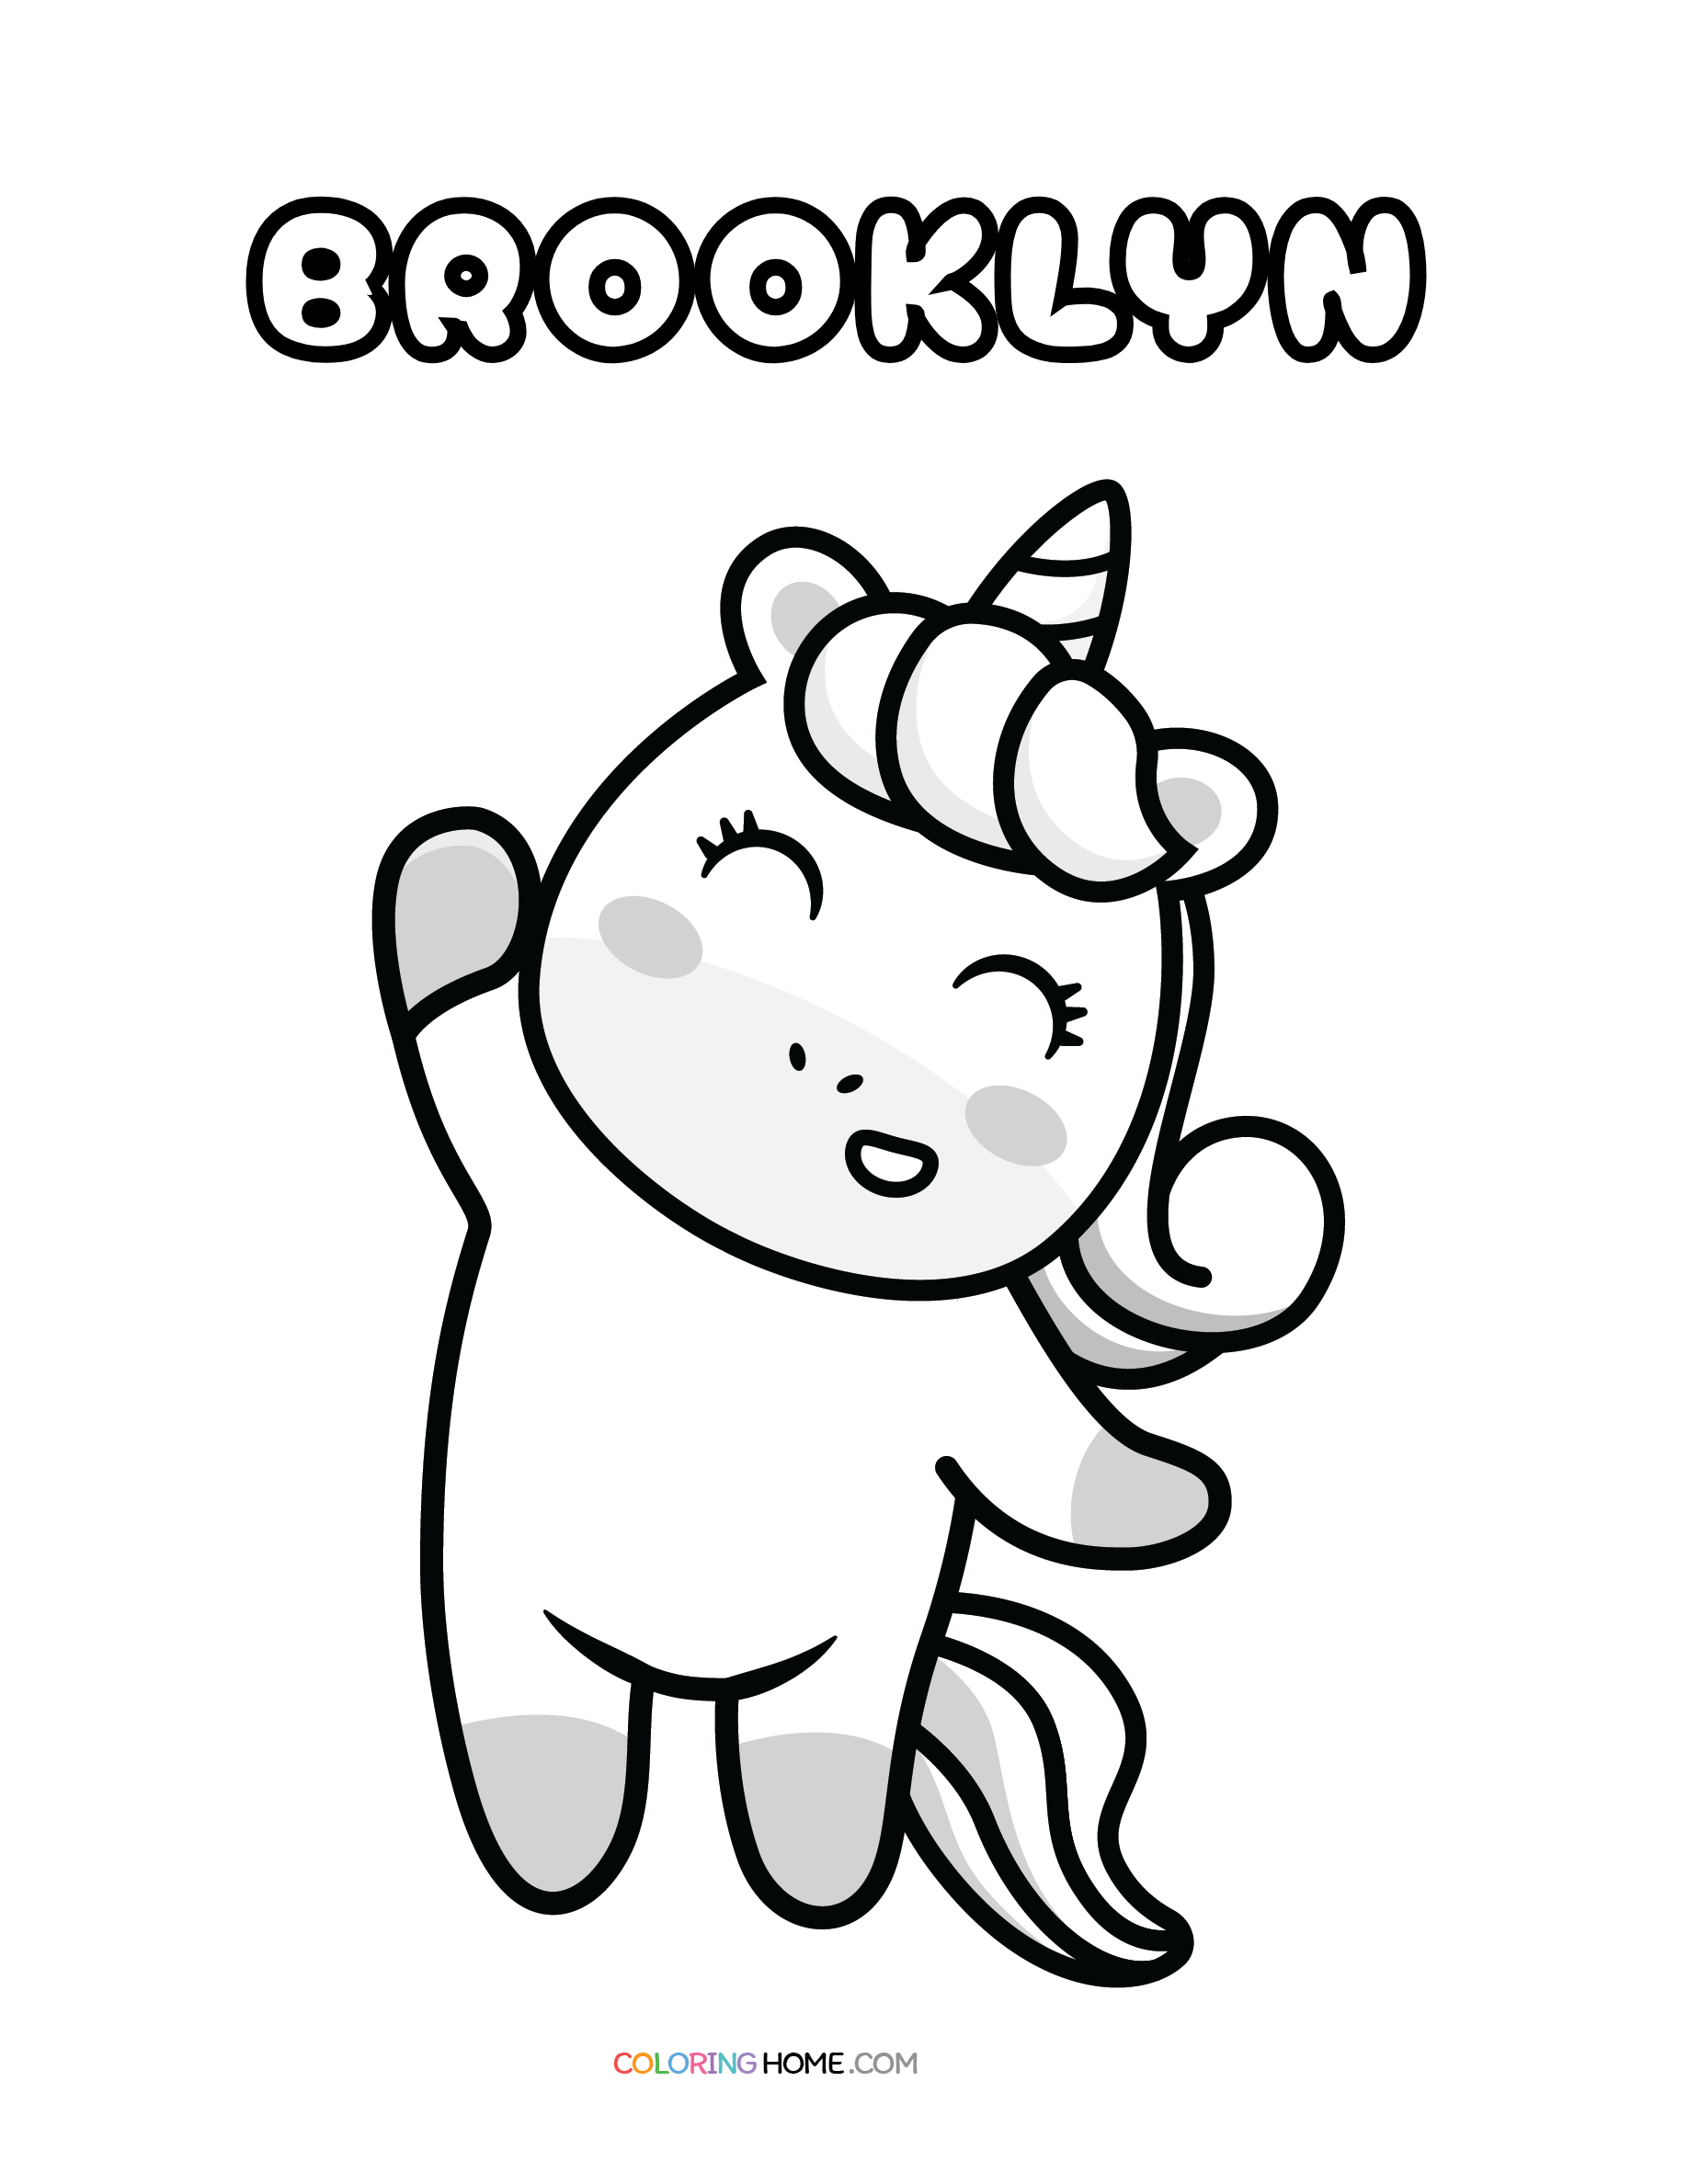 Brooklyn unicorn coloring page